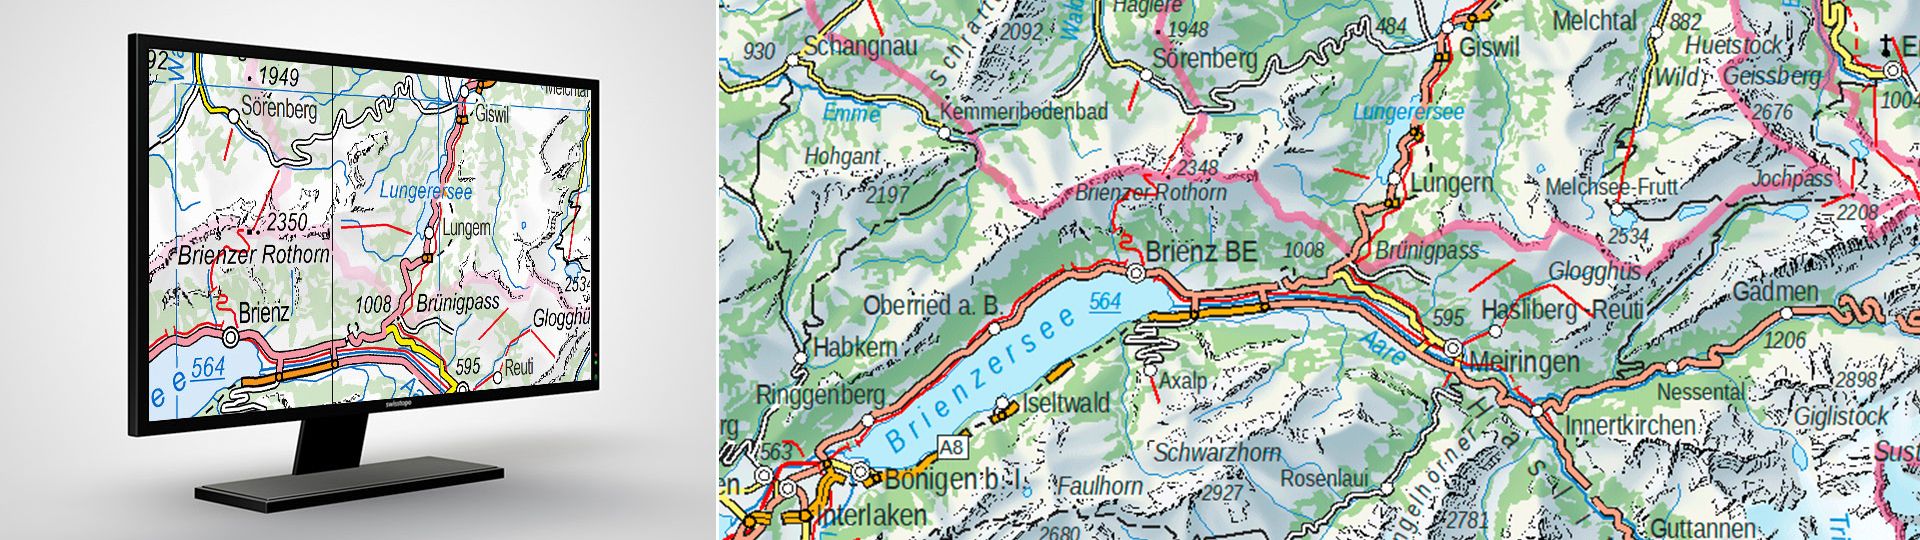 Swiss Map Vector 500: Vektorielle Landeskarte der Schweiz 1:500 000